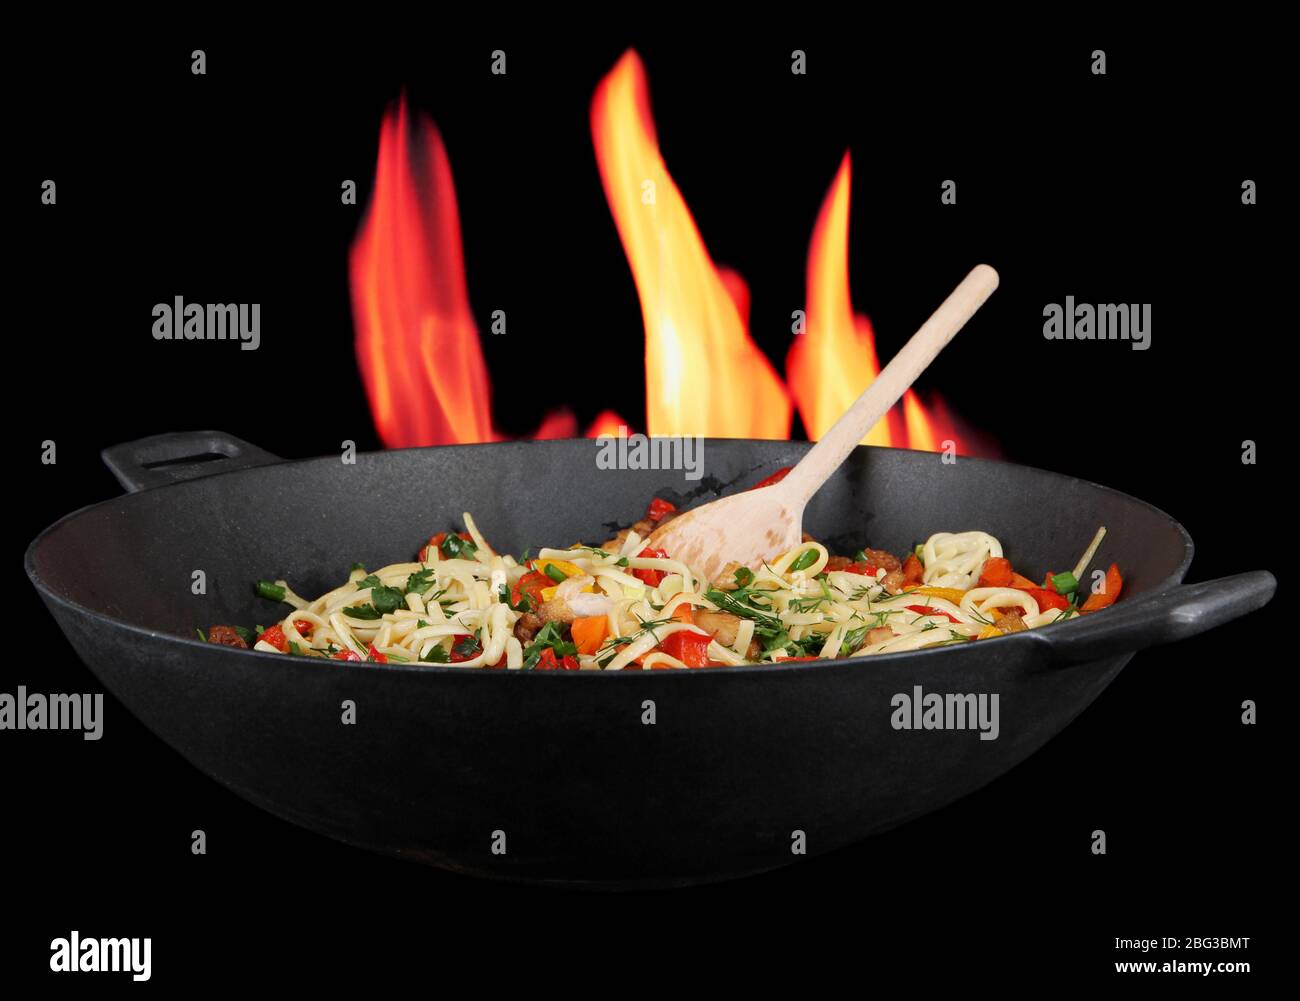 https://c8.alamy.com/comp/2BG3BMT/noodles-with-vegetables-on-wok-on-fire-background-2BG3BMT.jpg